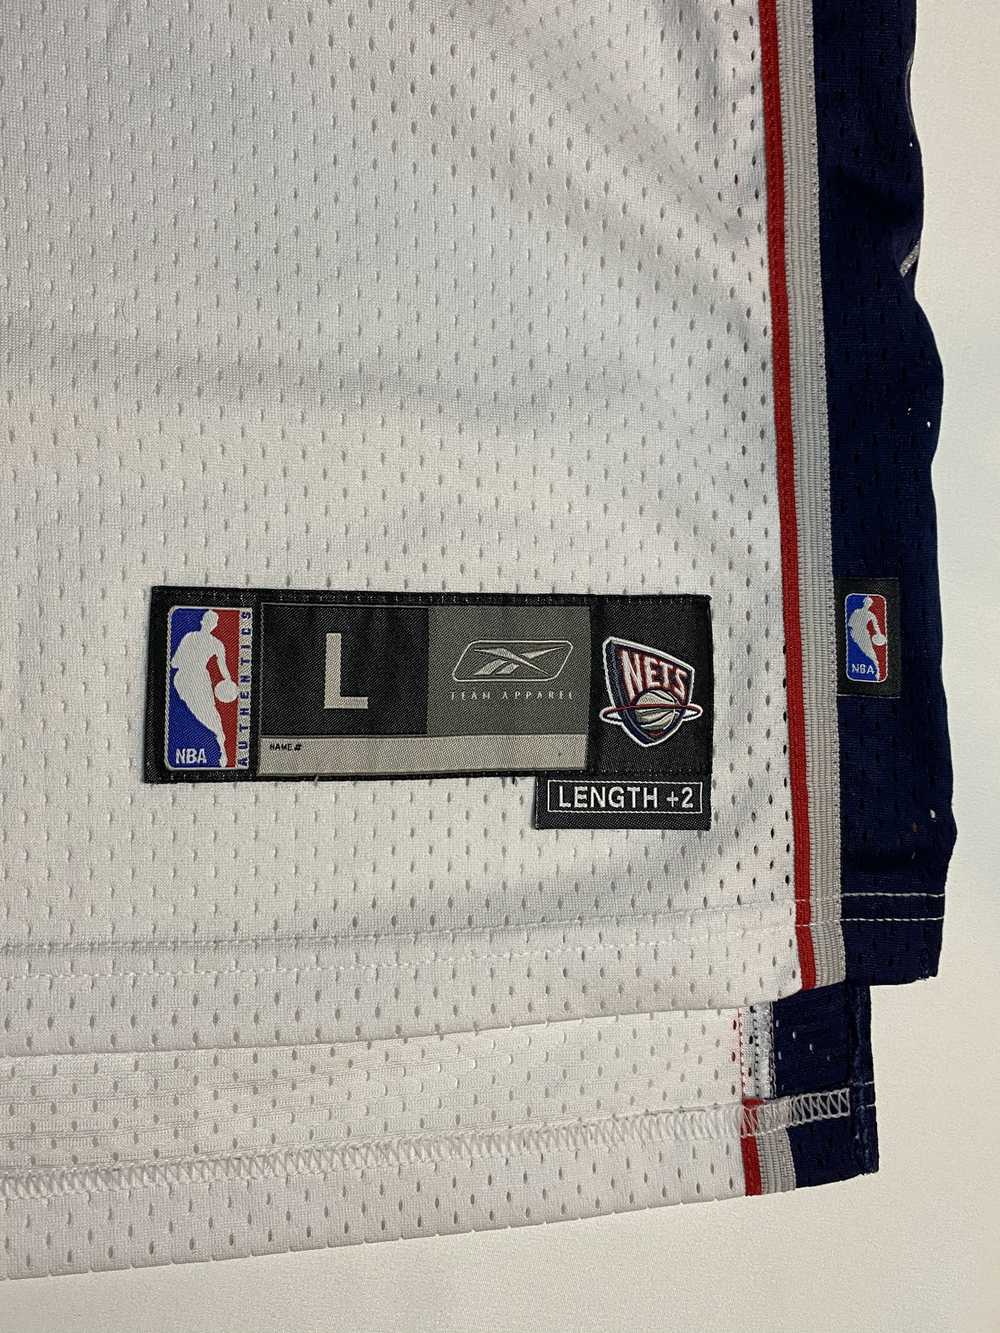 NBA × Reebok Richard Jefferson NBA Reebok jersey - image 2